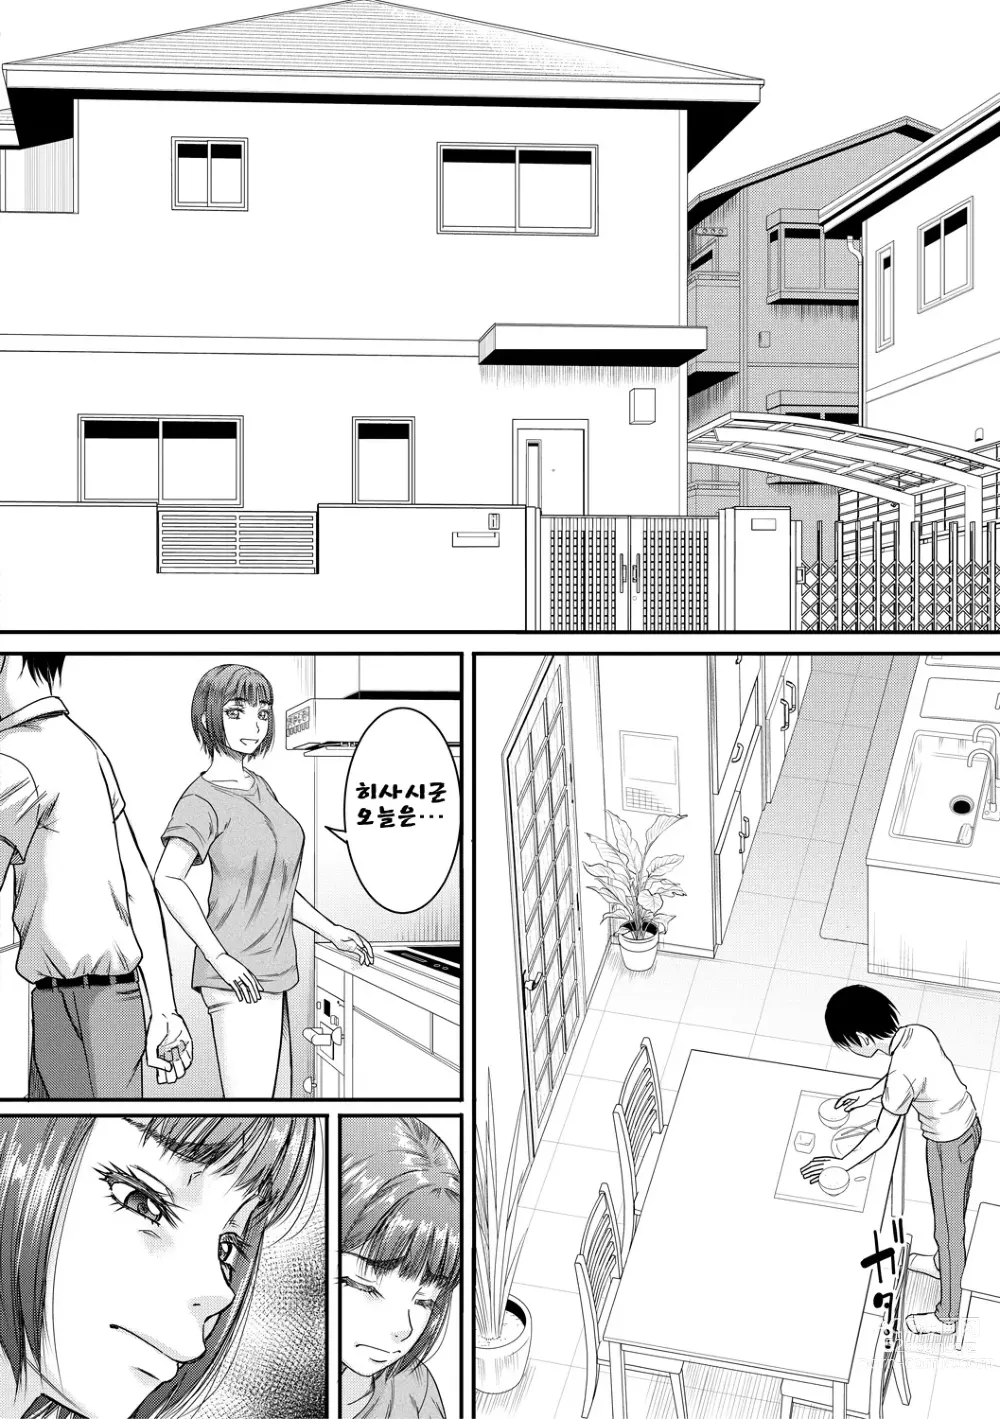 Page 14 of manga Boku to Okaa-san no Himitsu no Kankei l 나와 의붓 엄마의 비밀 관계